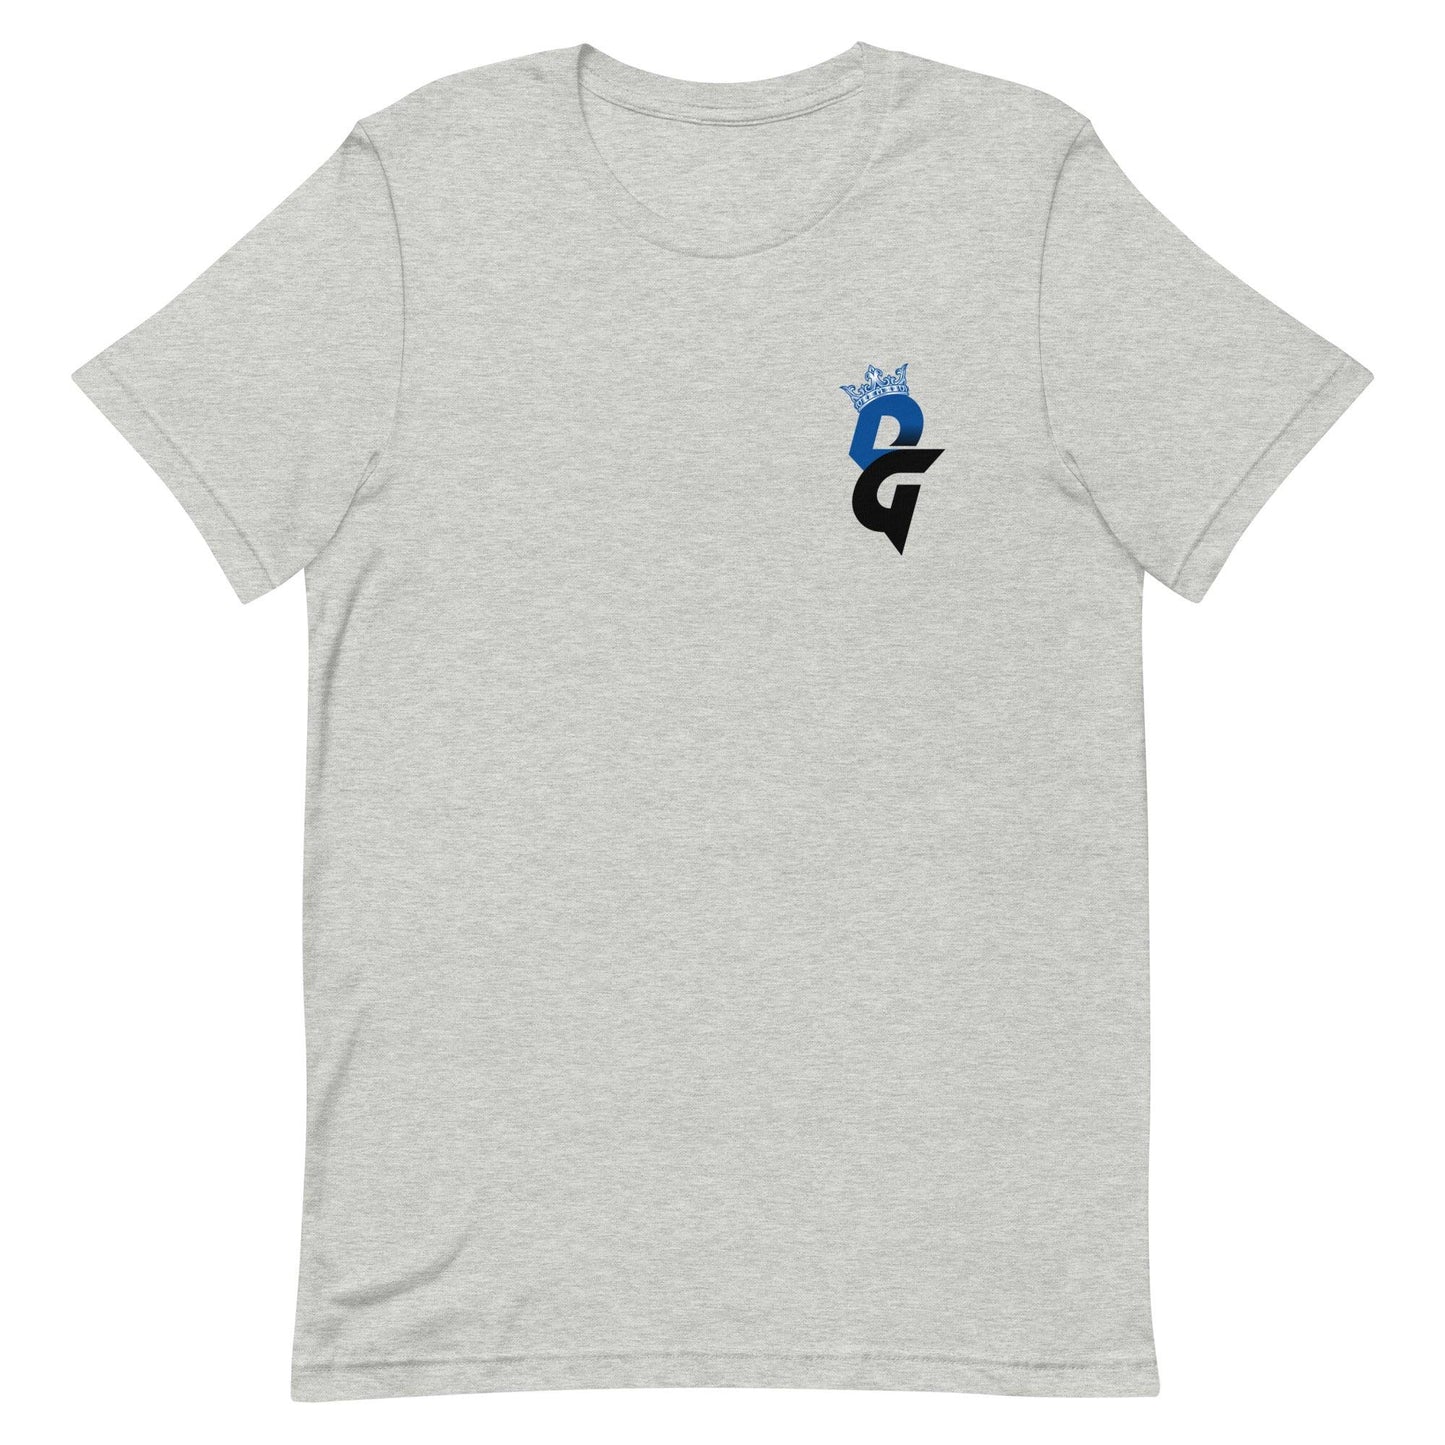 Darren Grainger "Essential" t-shirt - Fan Arch